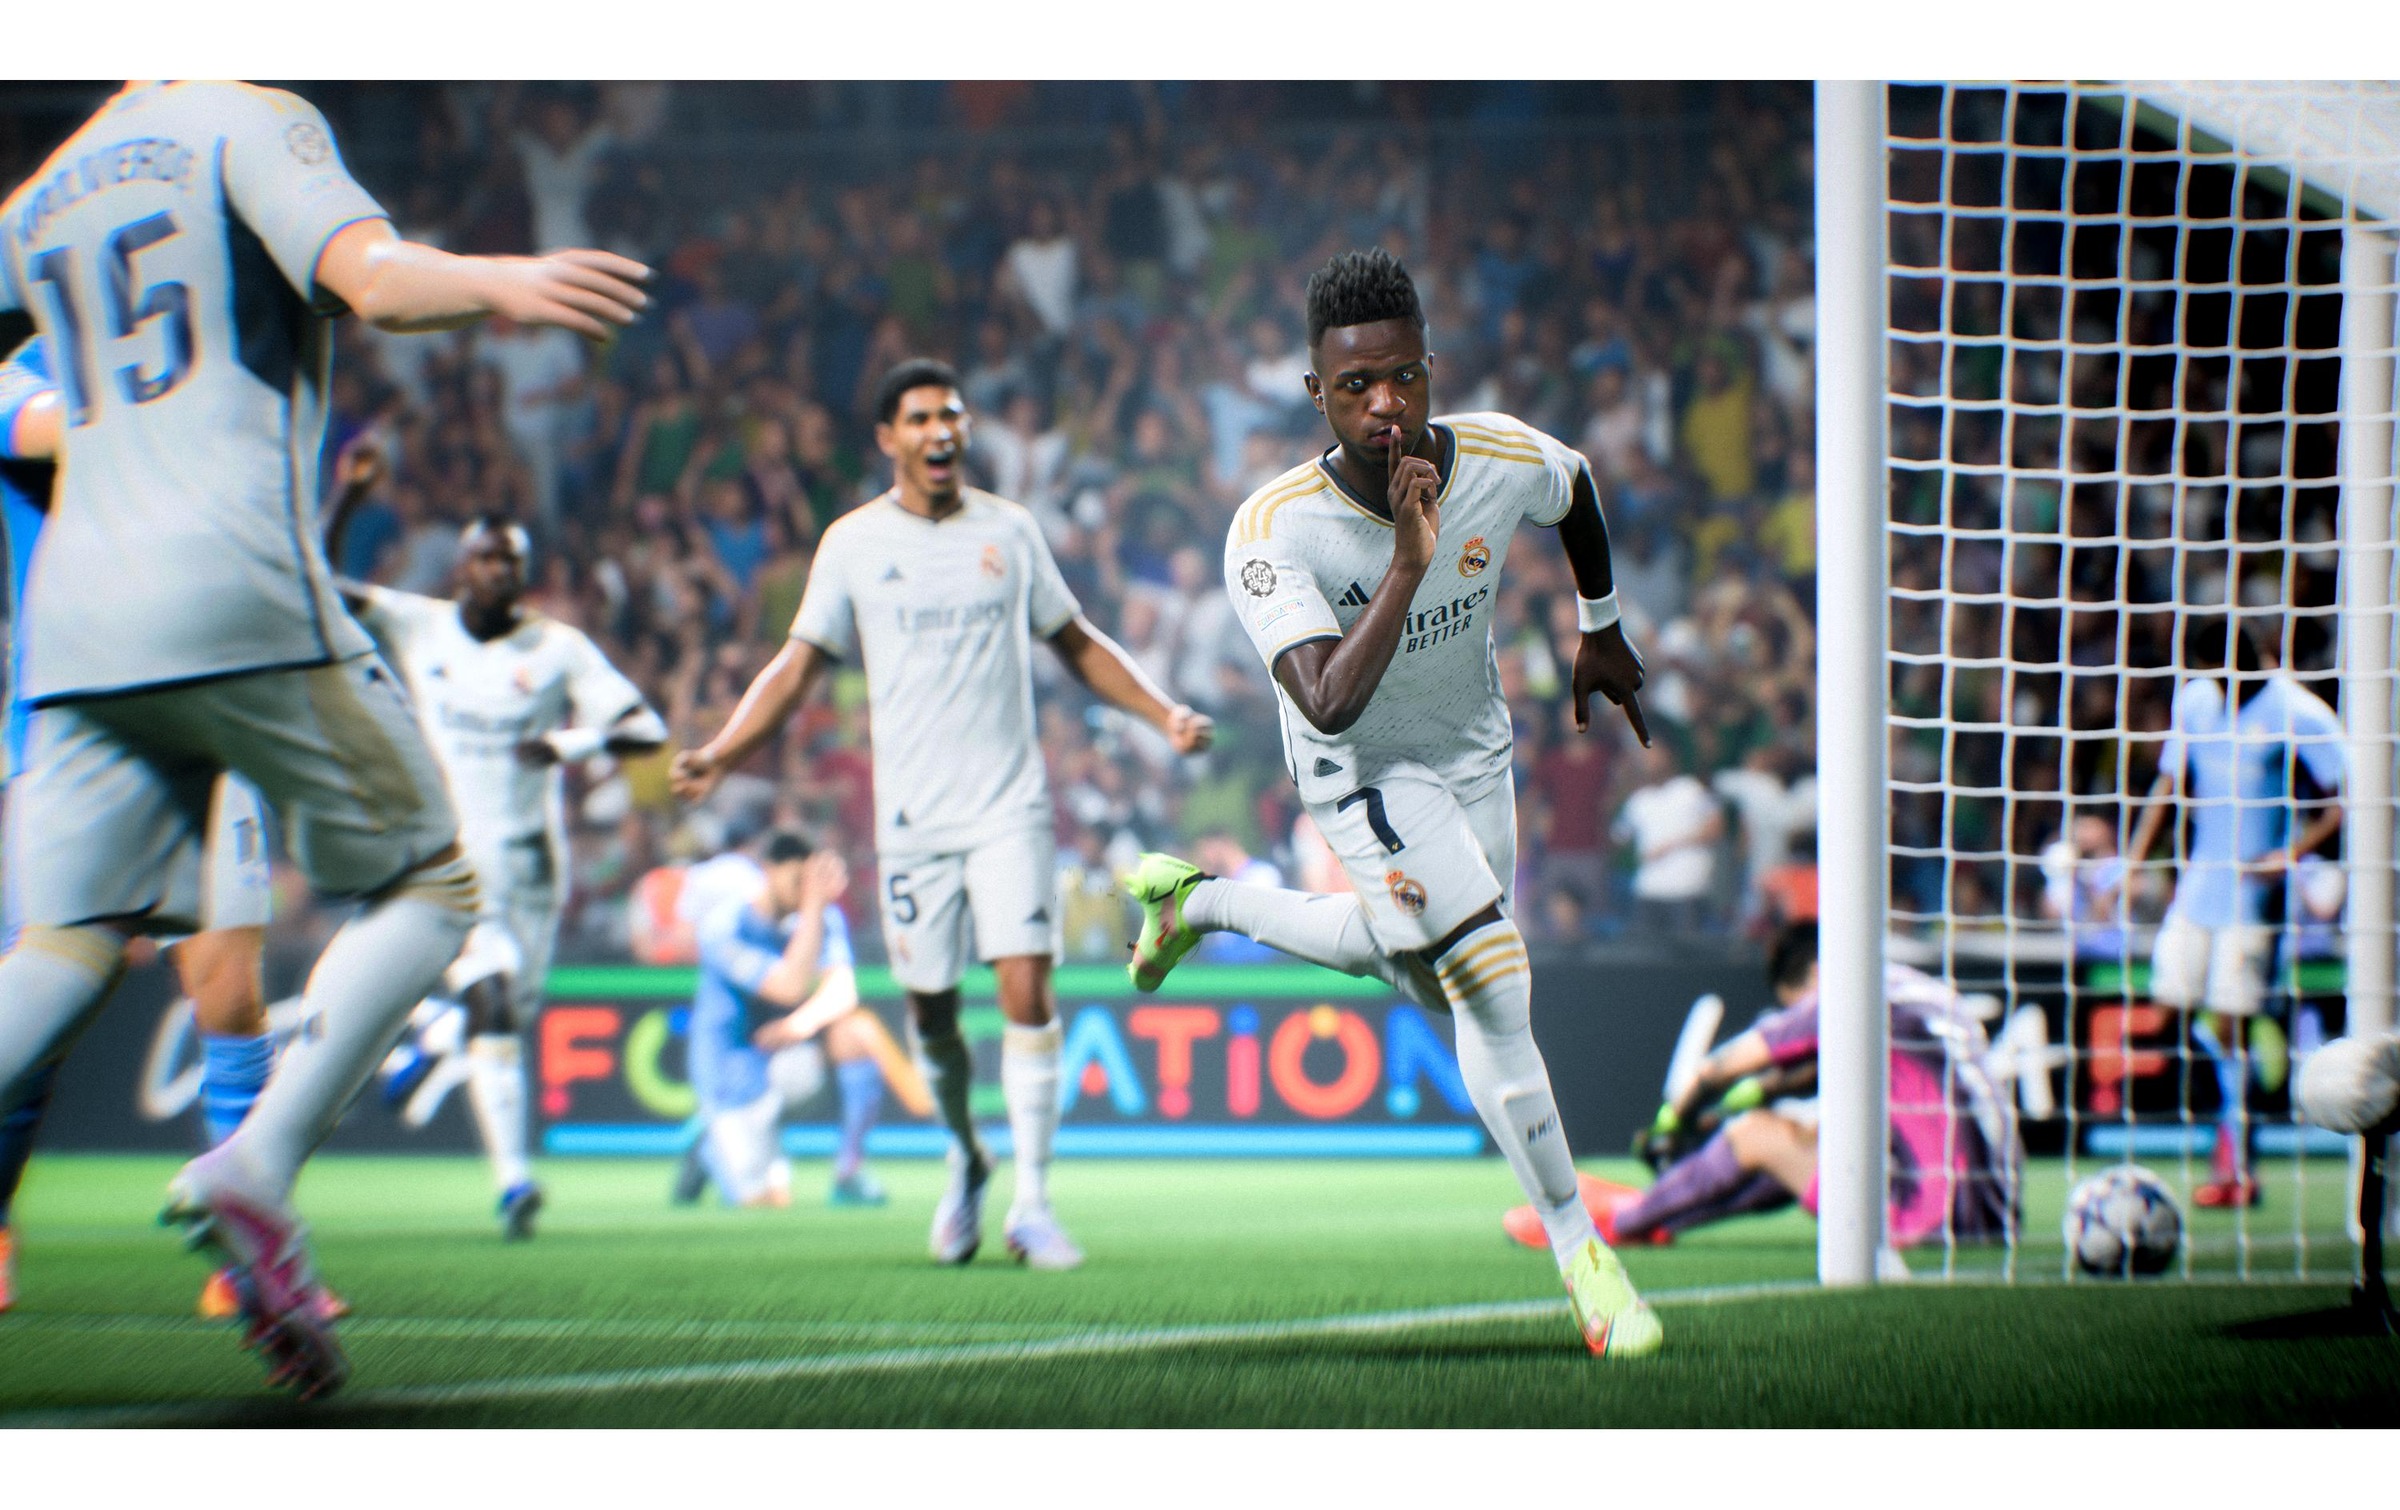 Electronic Arts Spielesoftware »EA Sports FC 24«, PlayStation 4